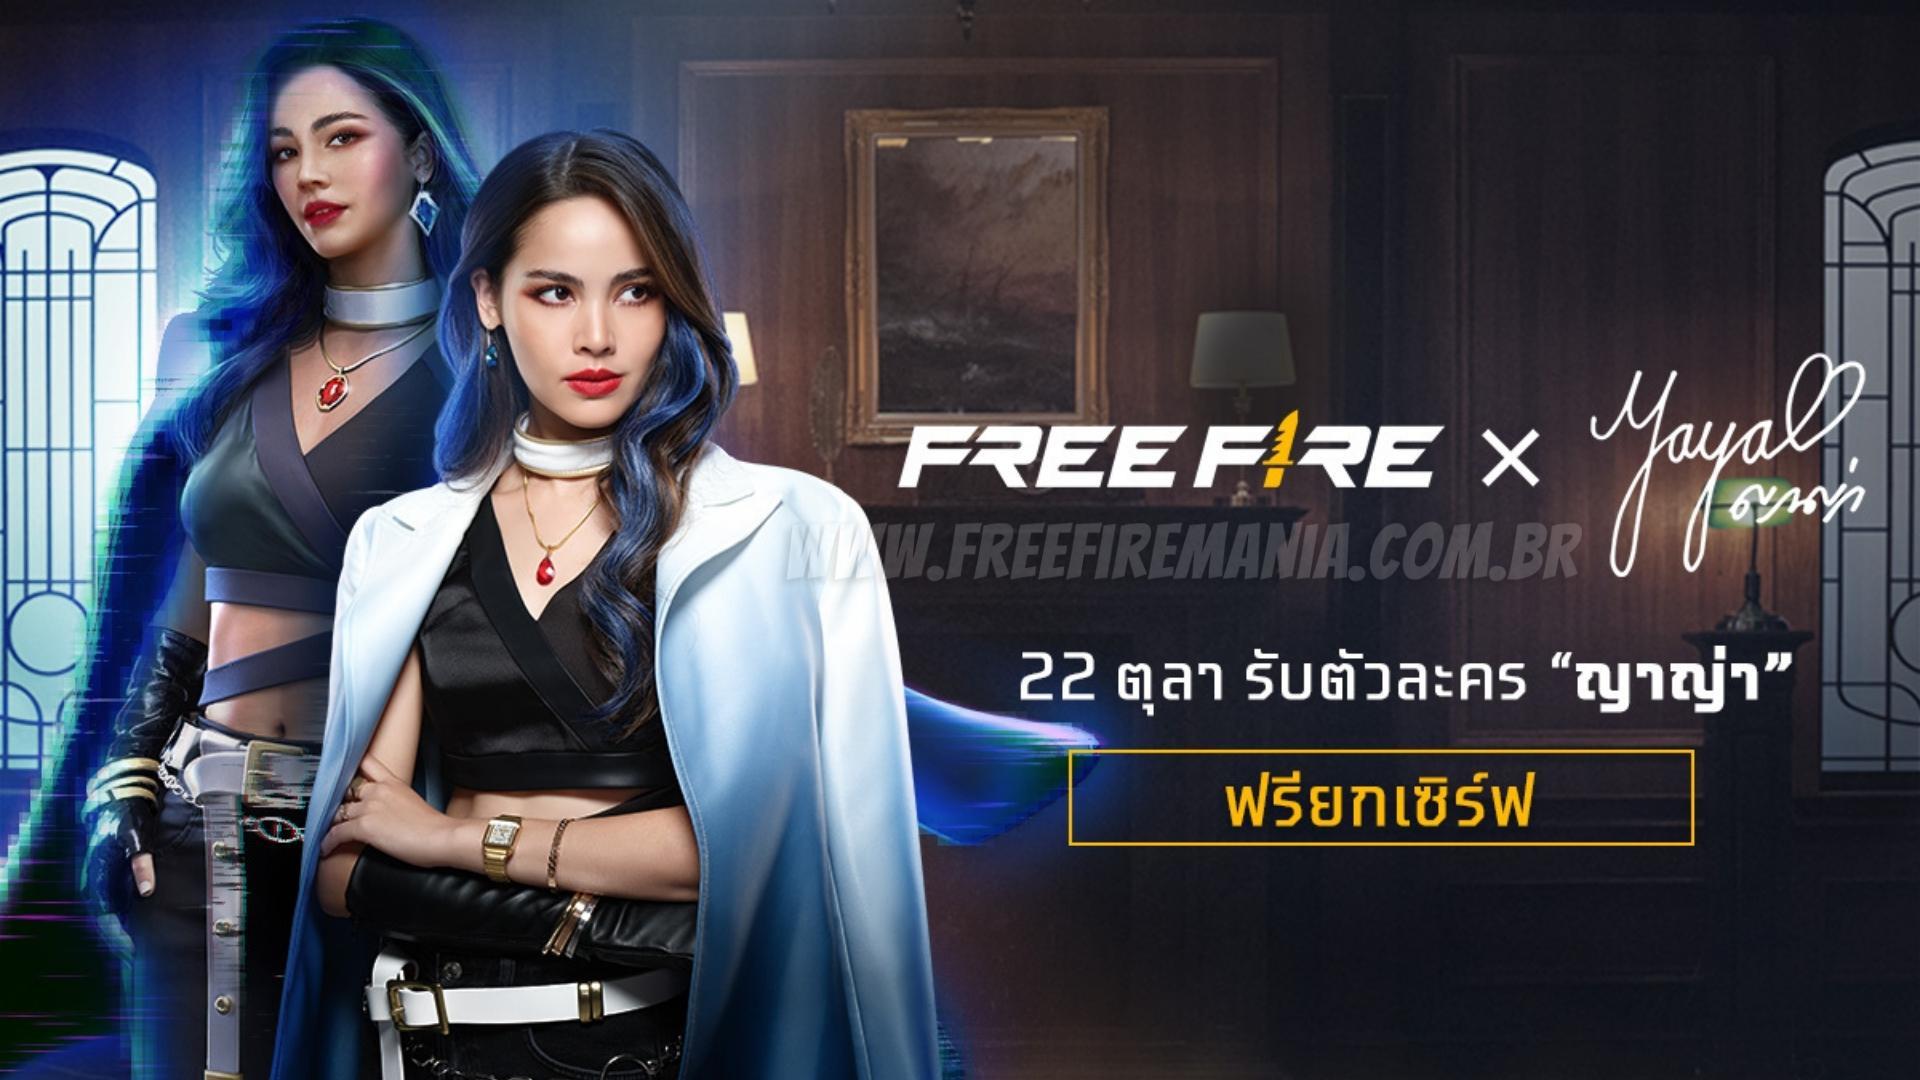 Luna Free Fire: conheça a artista tailandesa que deu vida a nova personagem